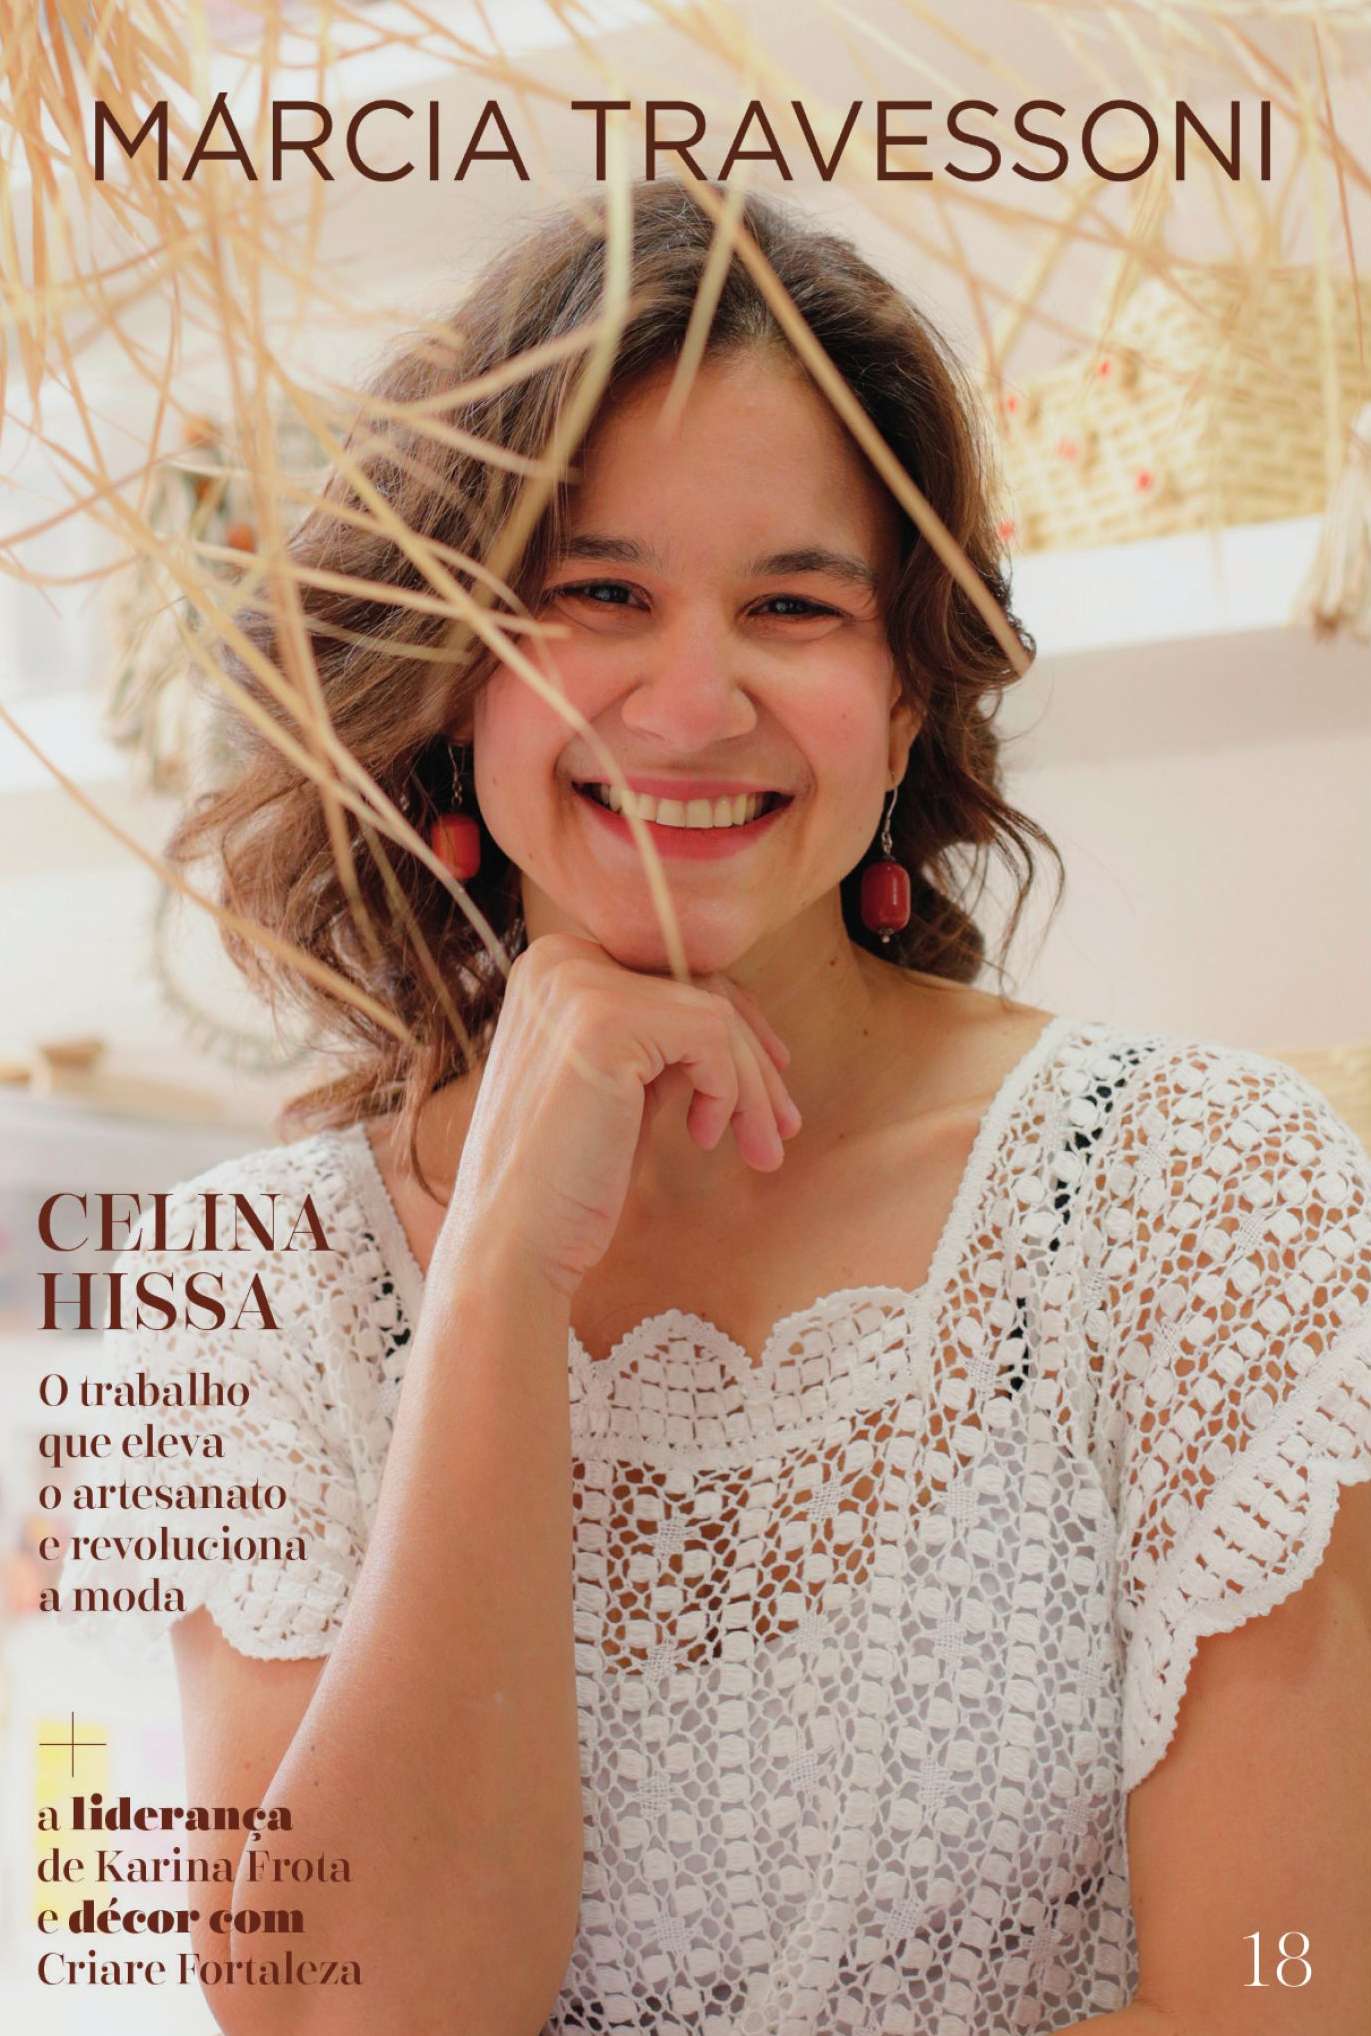 Revista Márcia Travessoni ed. 18: Celina Hissa